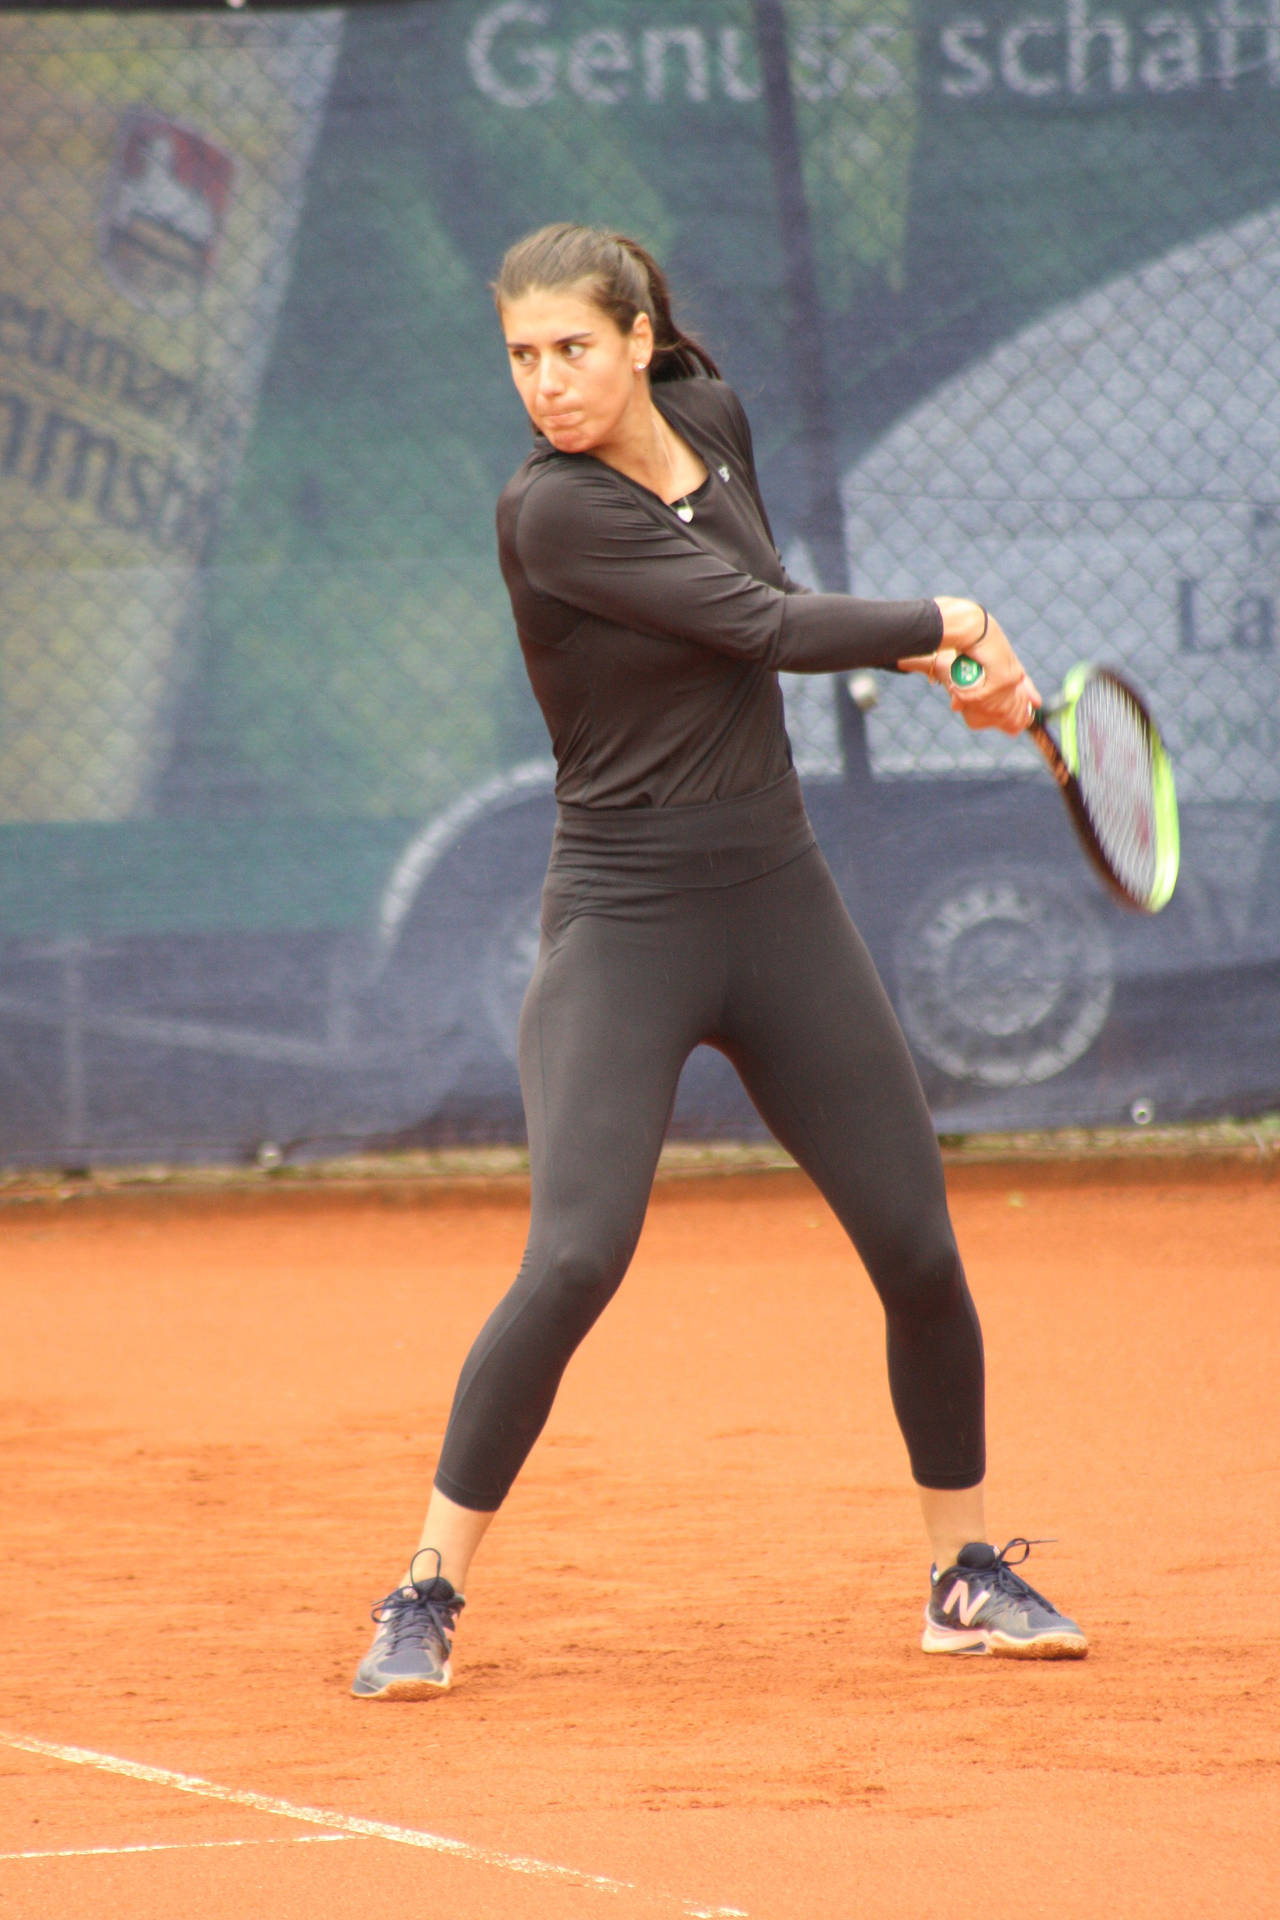 Professional Tennis Player Sorana Cirstea in action Wallpaper